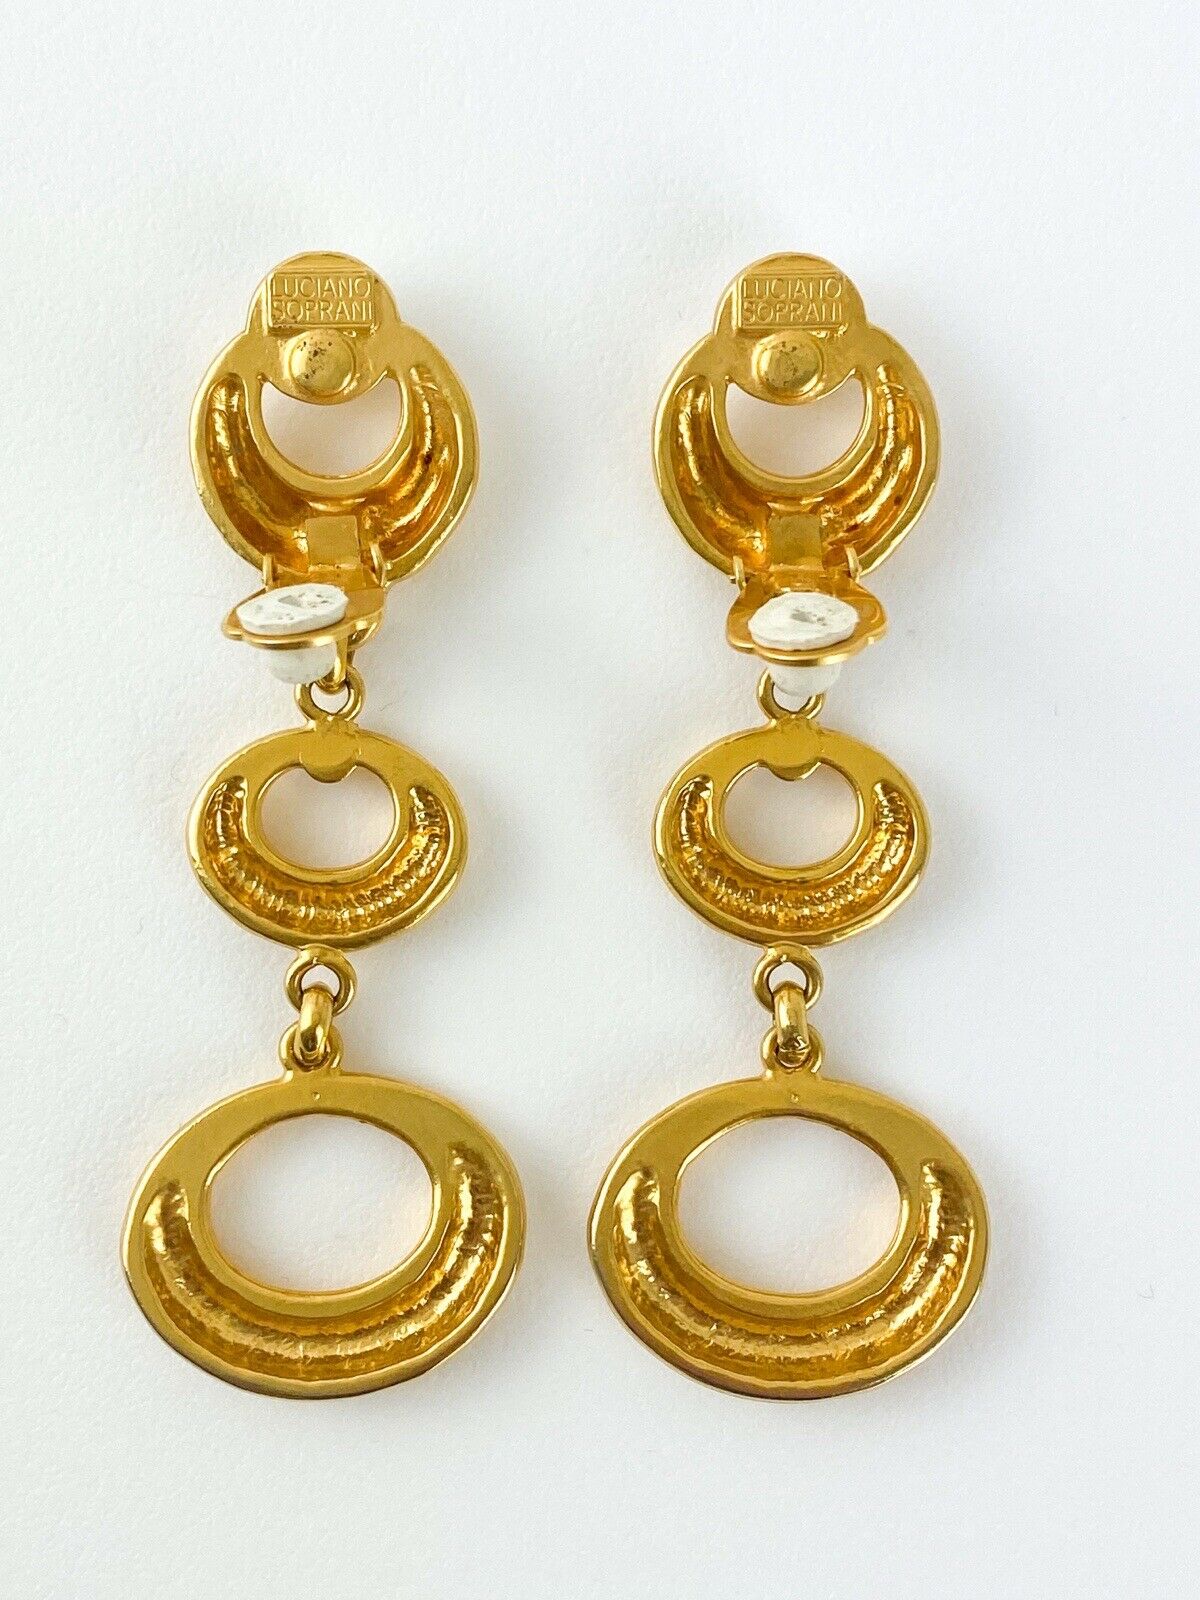 LUCIANO SOPRANI Gold Tone Dangle Earrings Faux Pearls Rhinestones Vintage